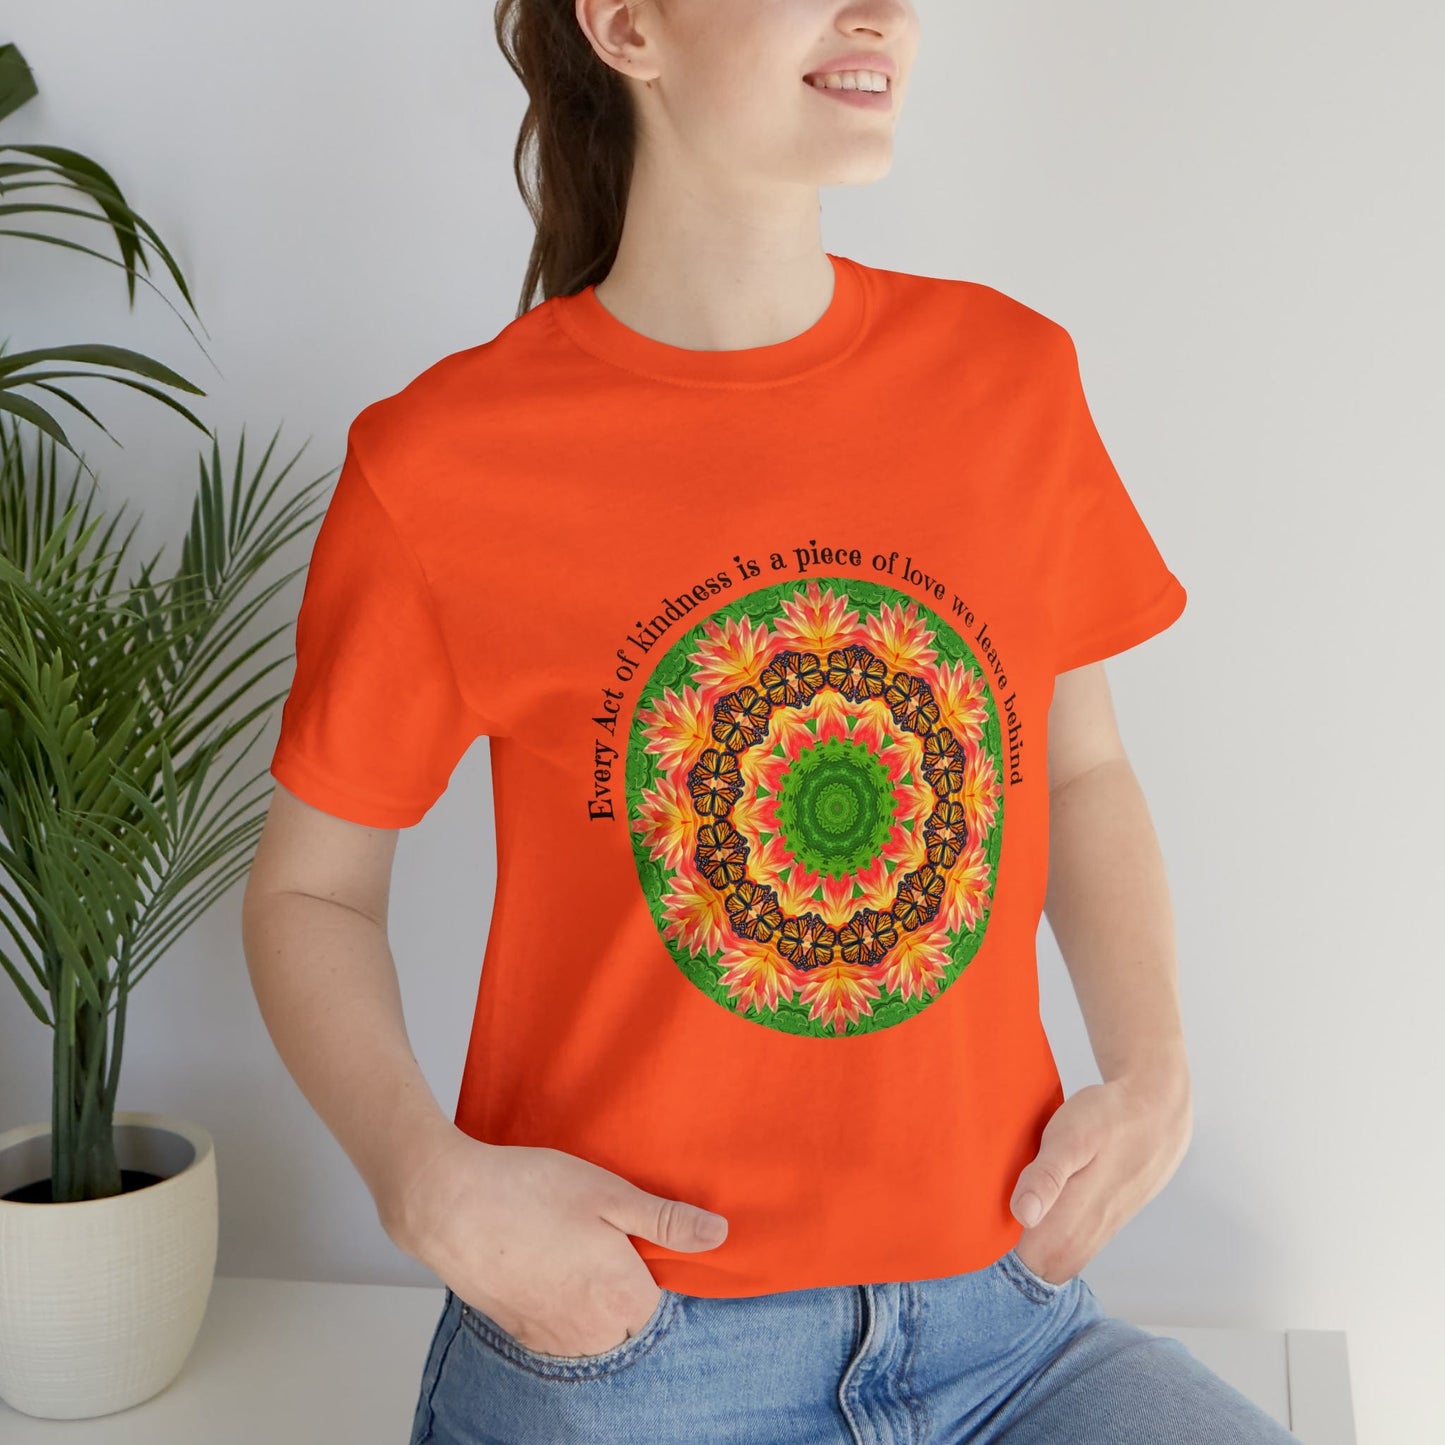 Beautiful Butterfly Mandala Art Graphic Tee Shirt - Cottagecore Clothing A Nature Lovers Delight Ornate Orbit orange